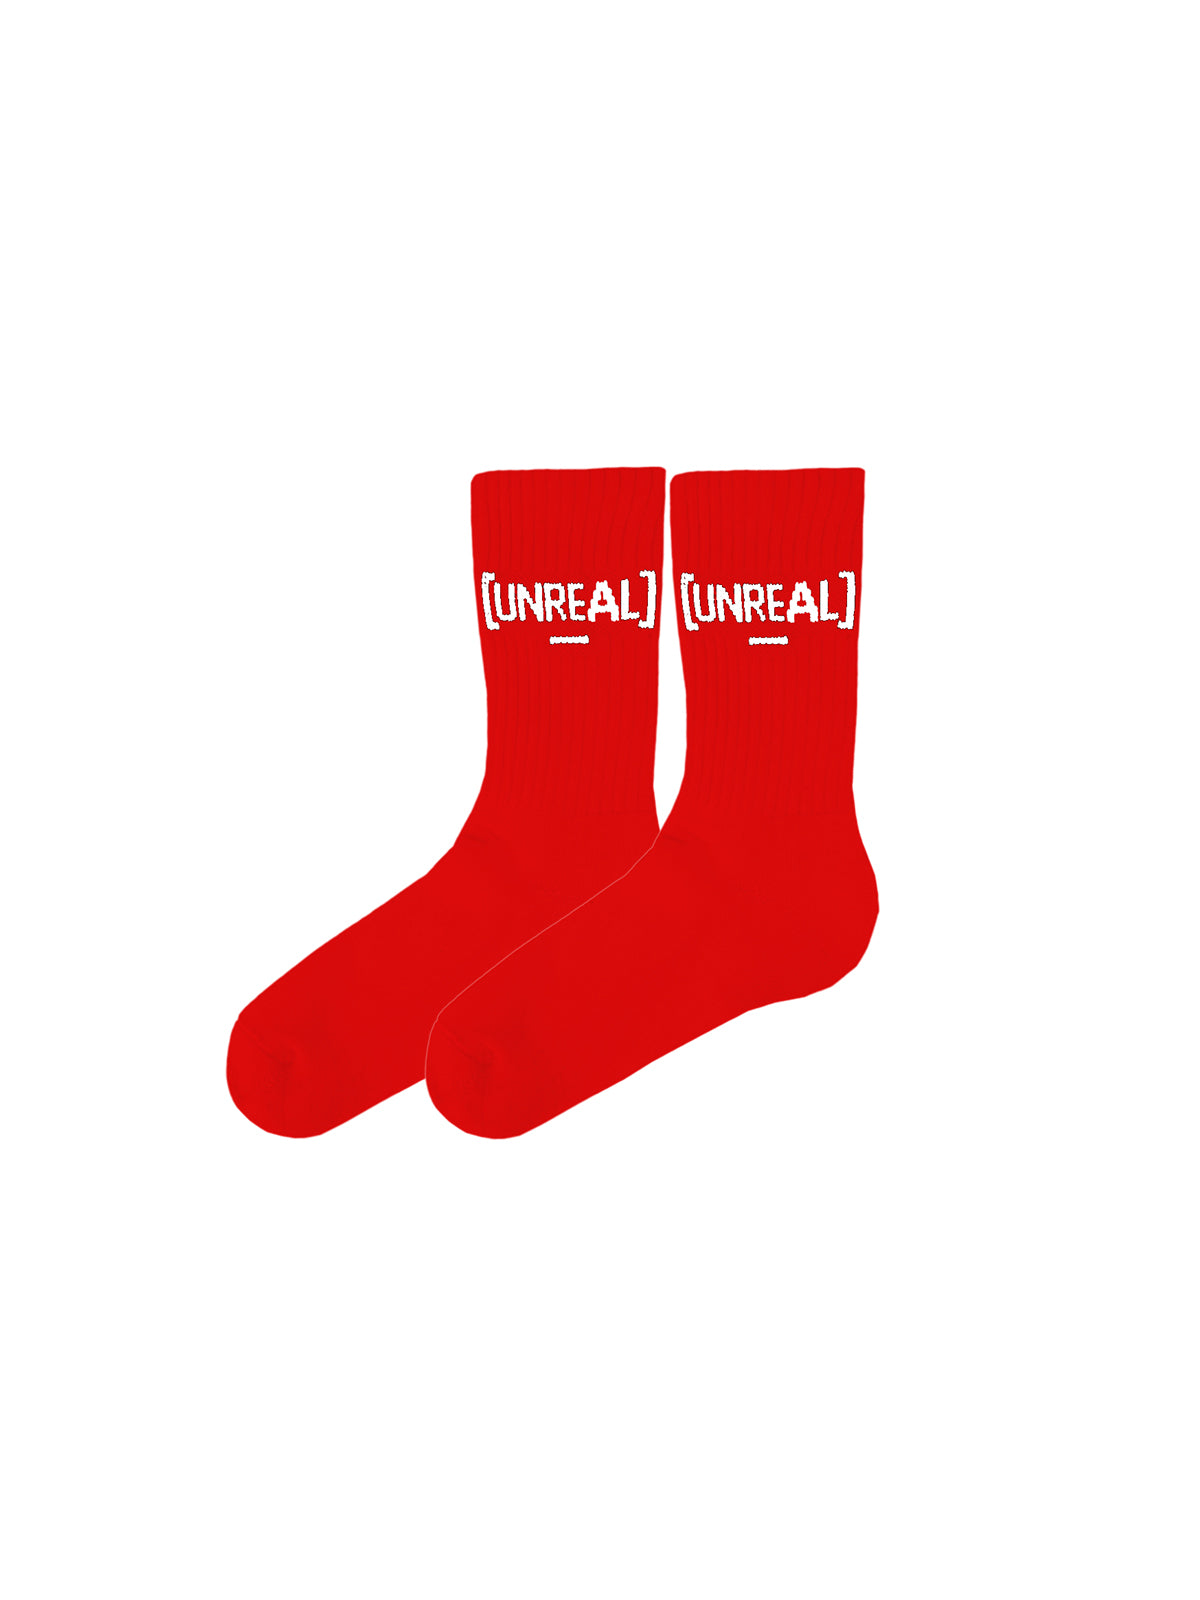 UNREAL - Red/White logo Socks